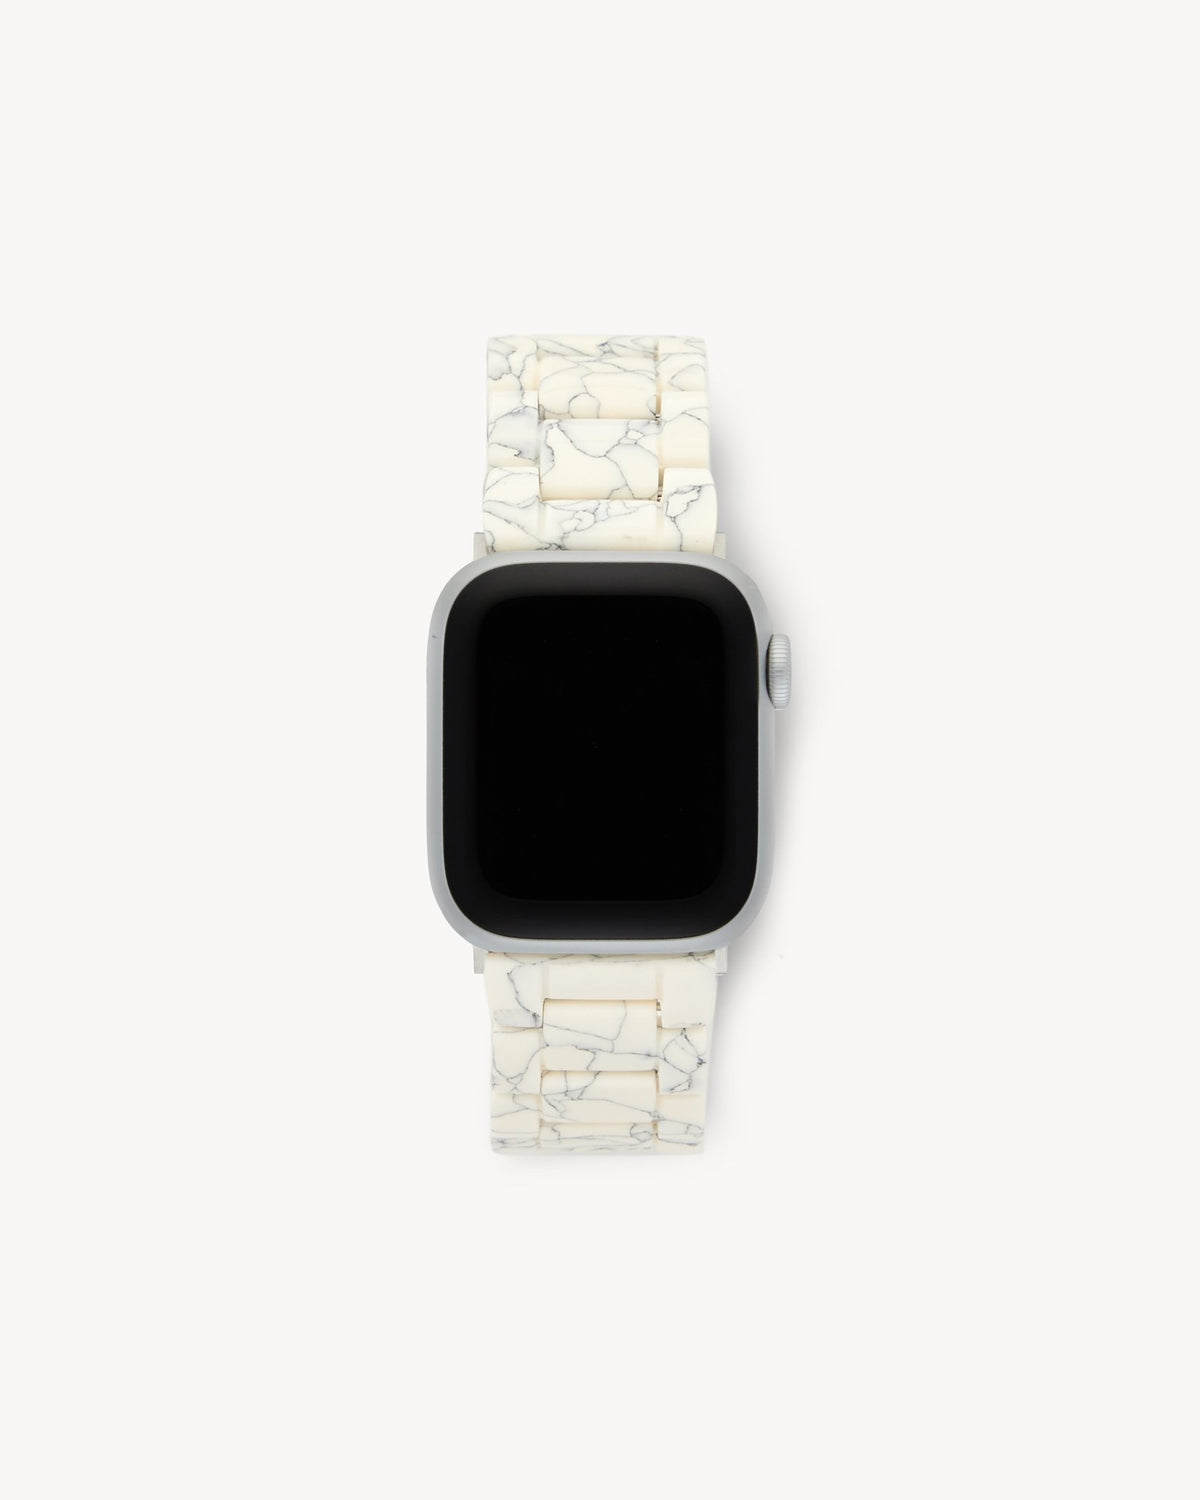 Apple Watch Band in Marble - MACHETE